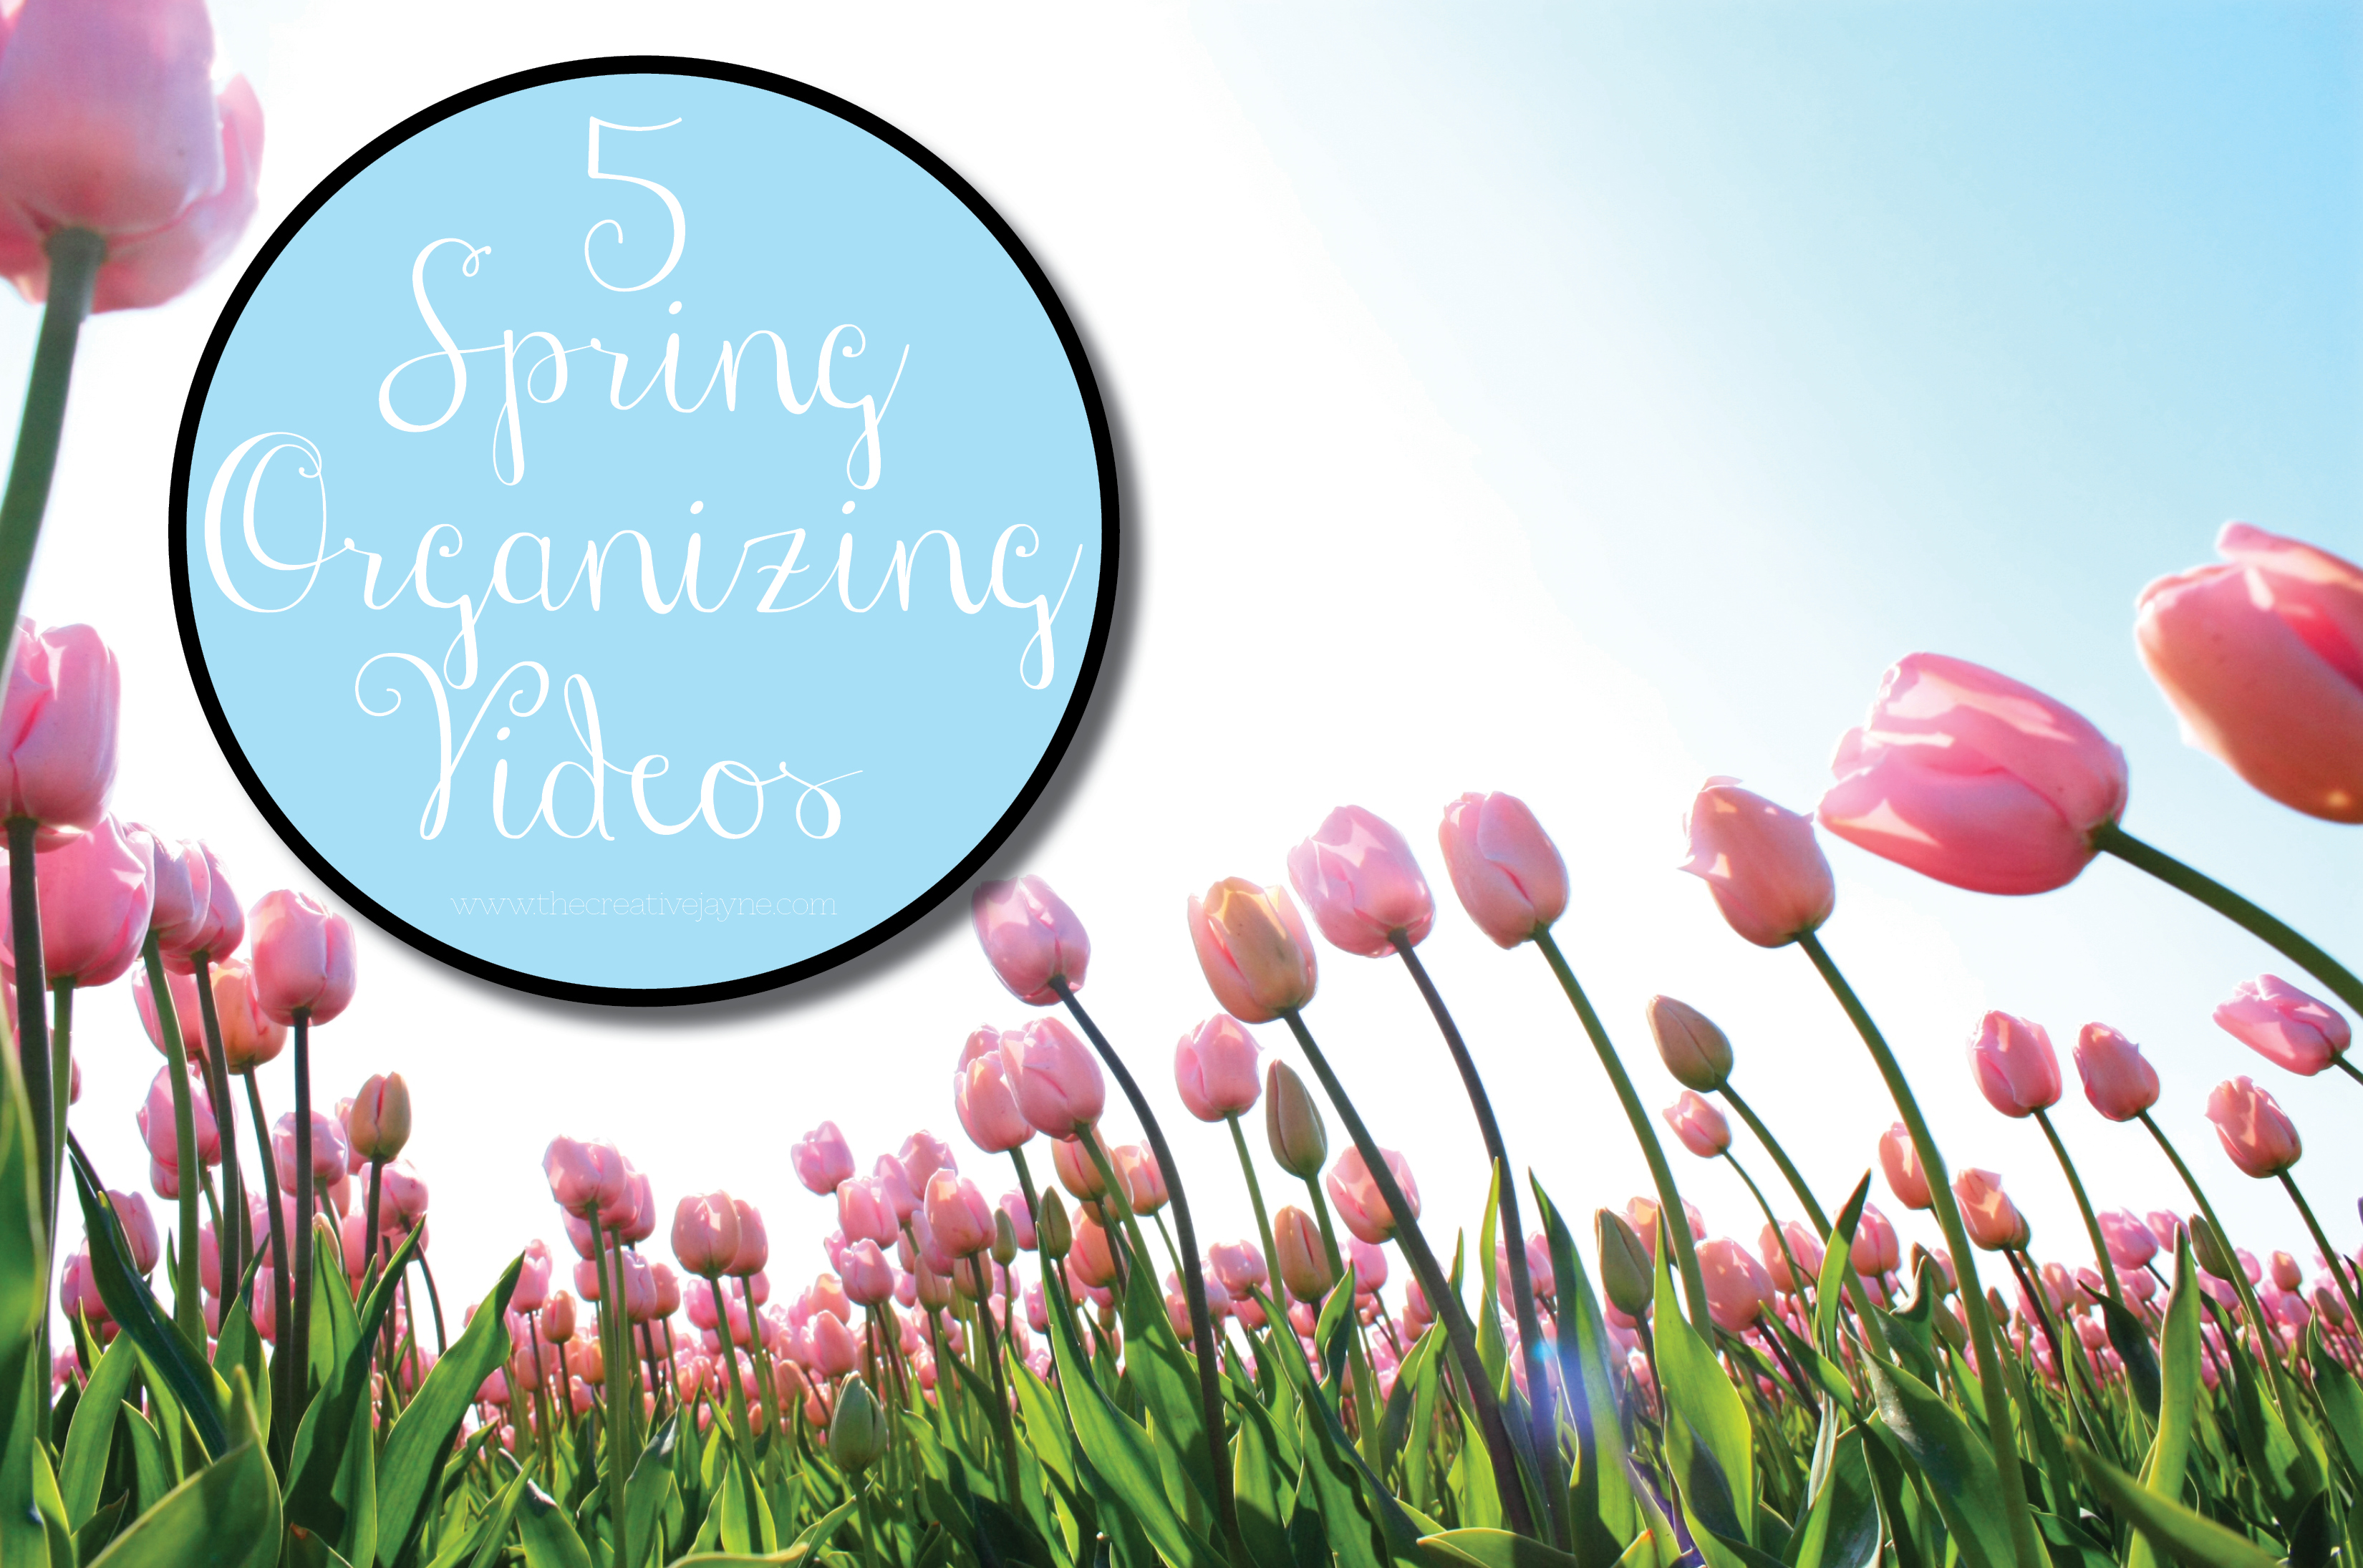 the Creative Jayne 5 spring organizing videos